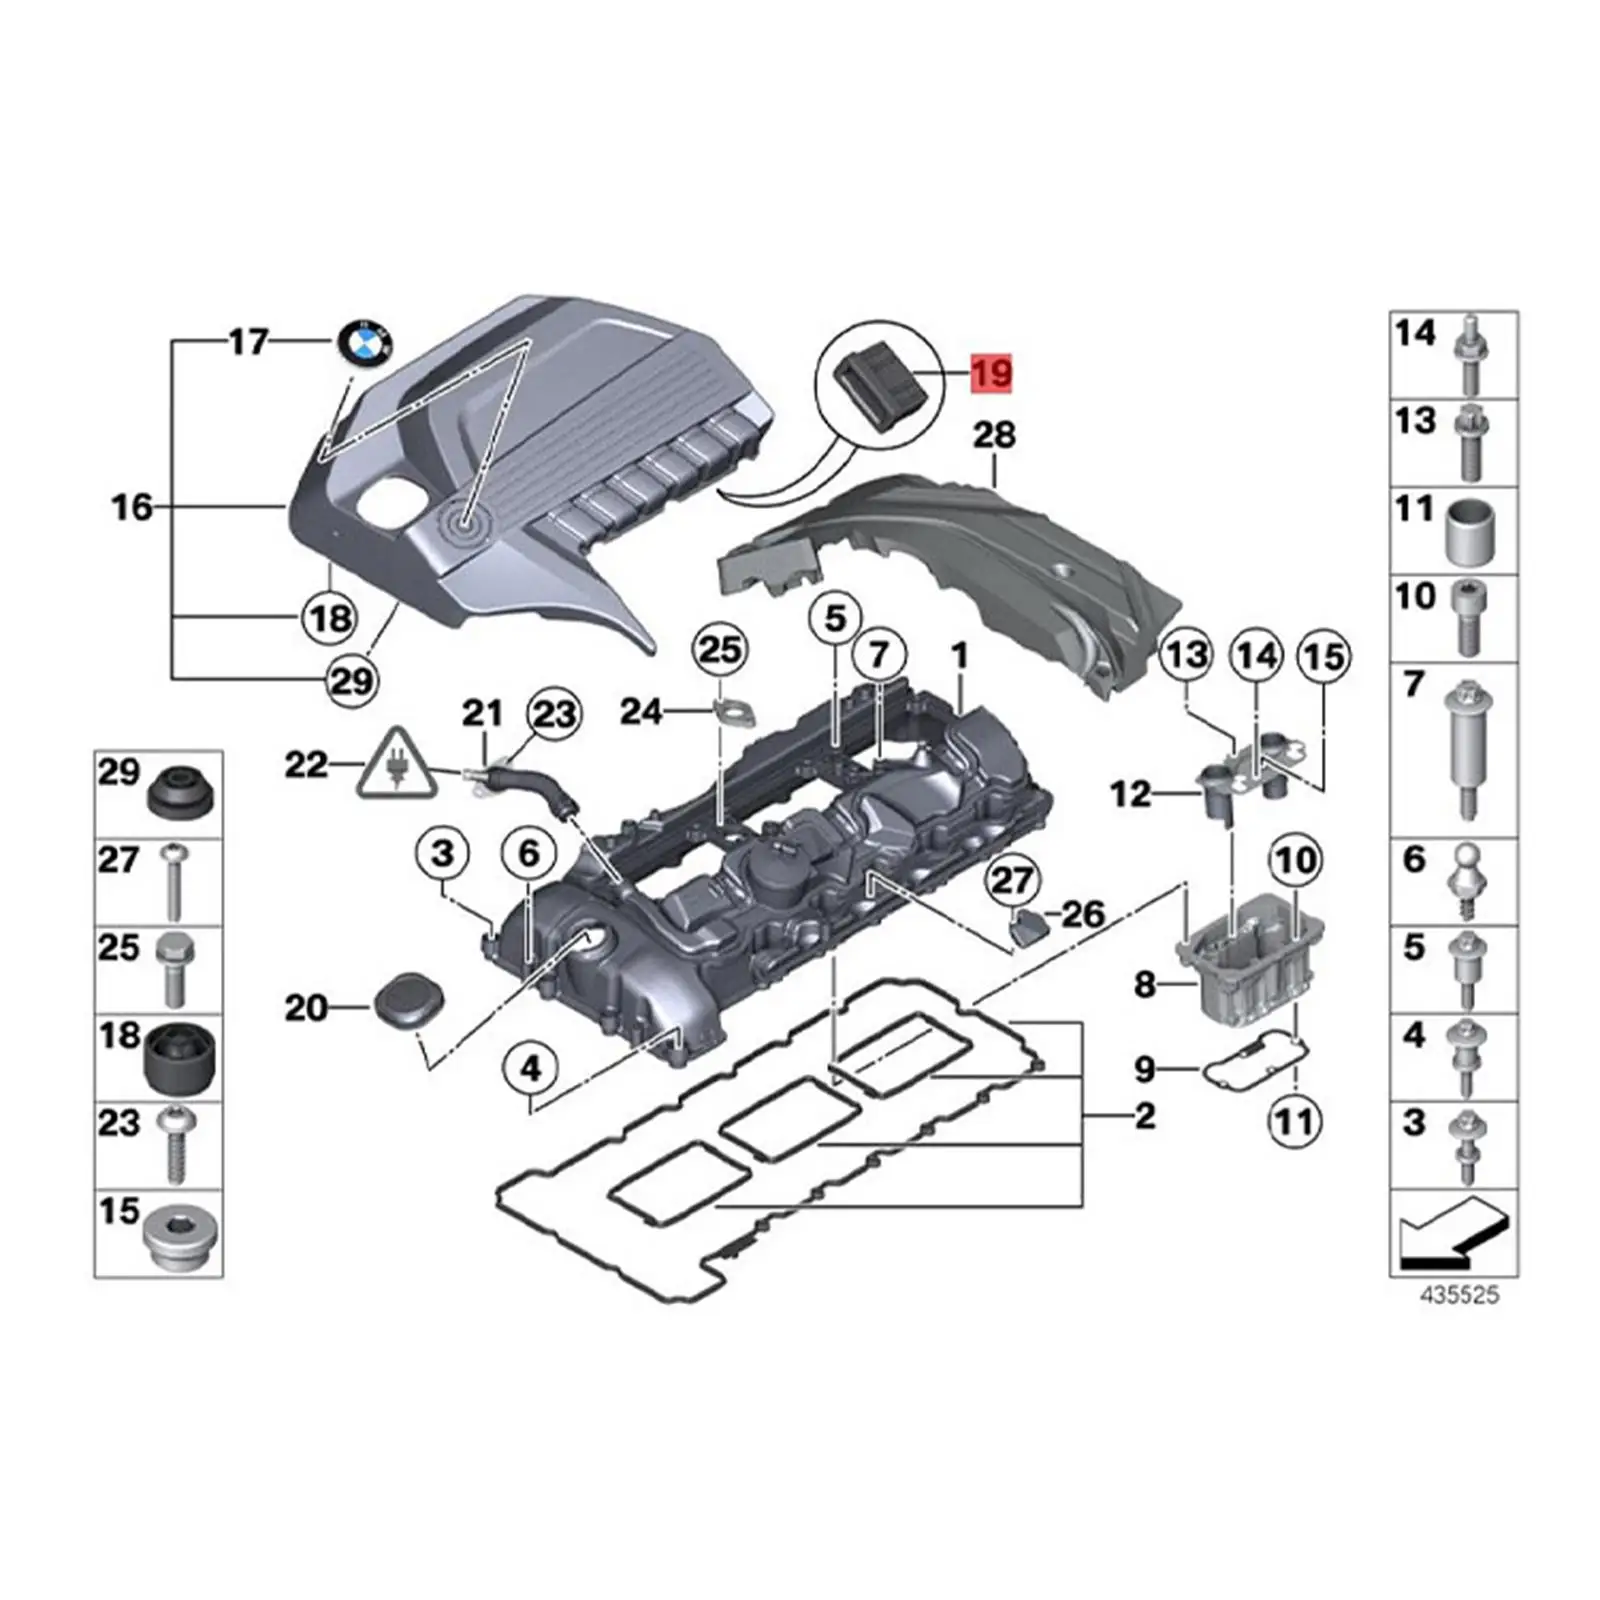 Upper Radiator Mount Parts 17111712911 for BMW E32 735i E32 740i E32 740il E34 530i Touring E32 735il